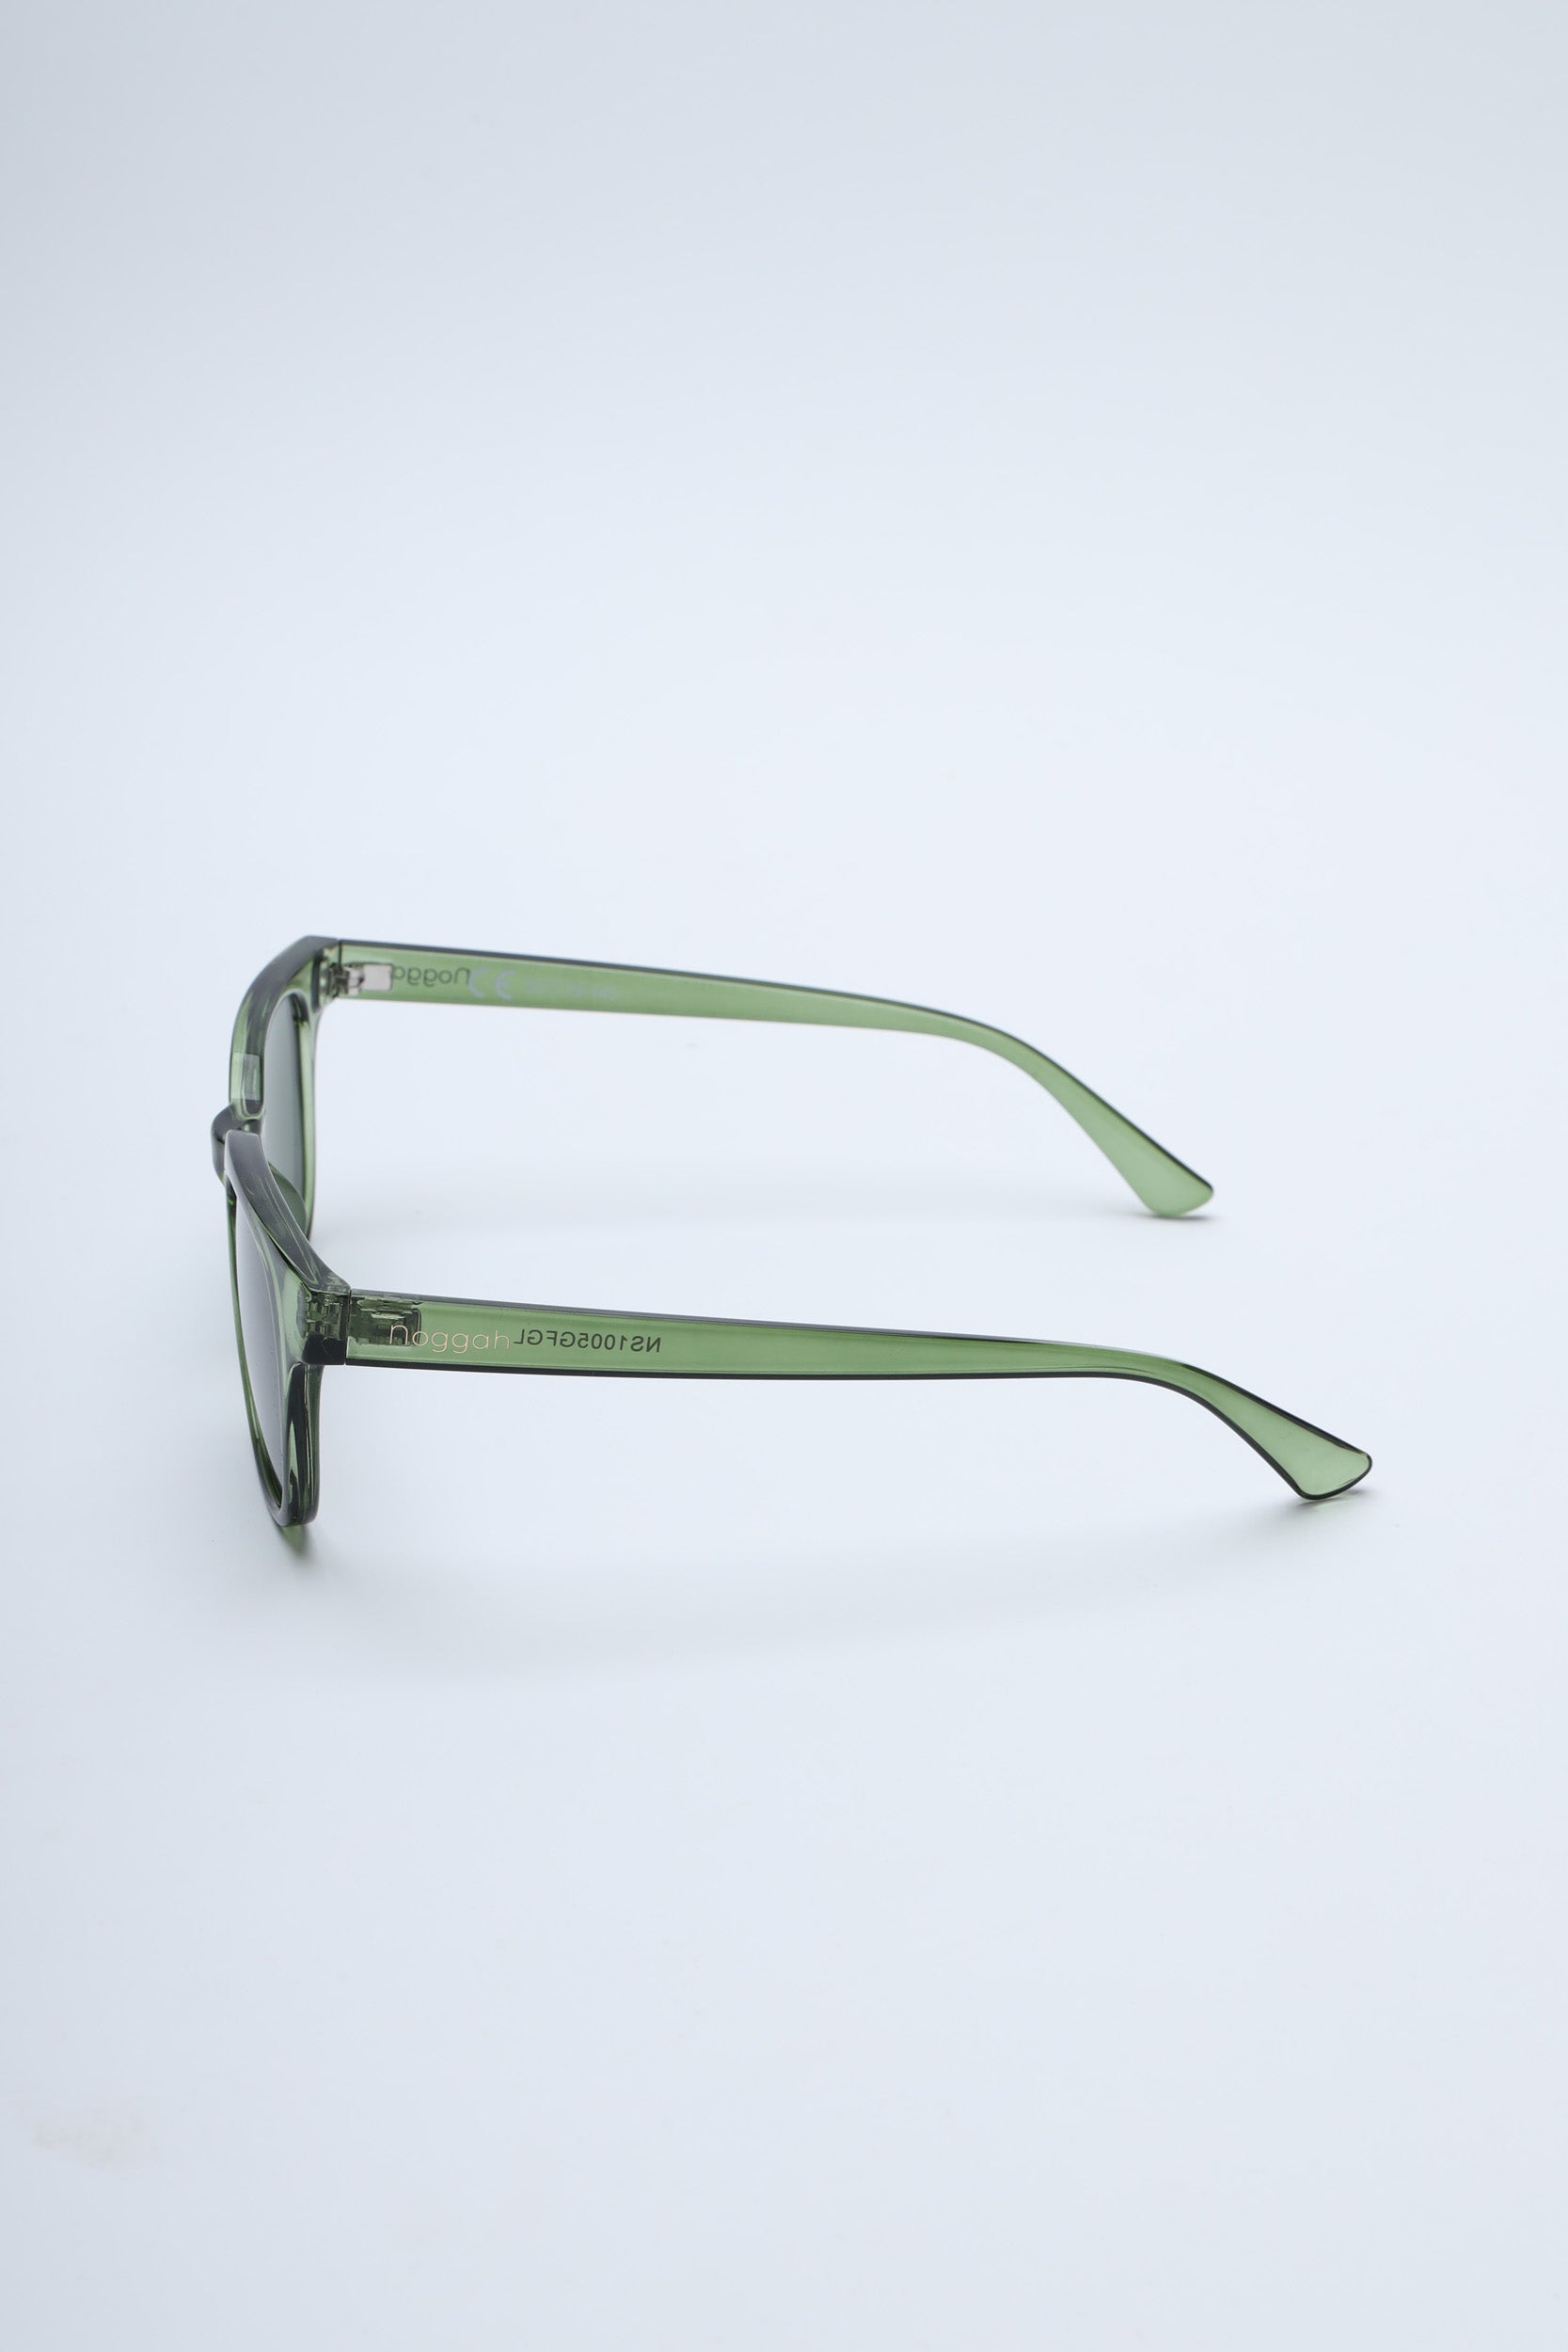 NS1005GFGL PC Green Frame with Green Glass Lens Sunglasses